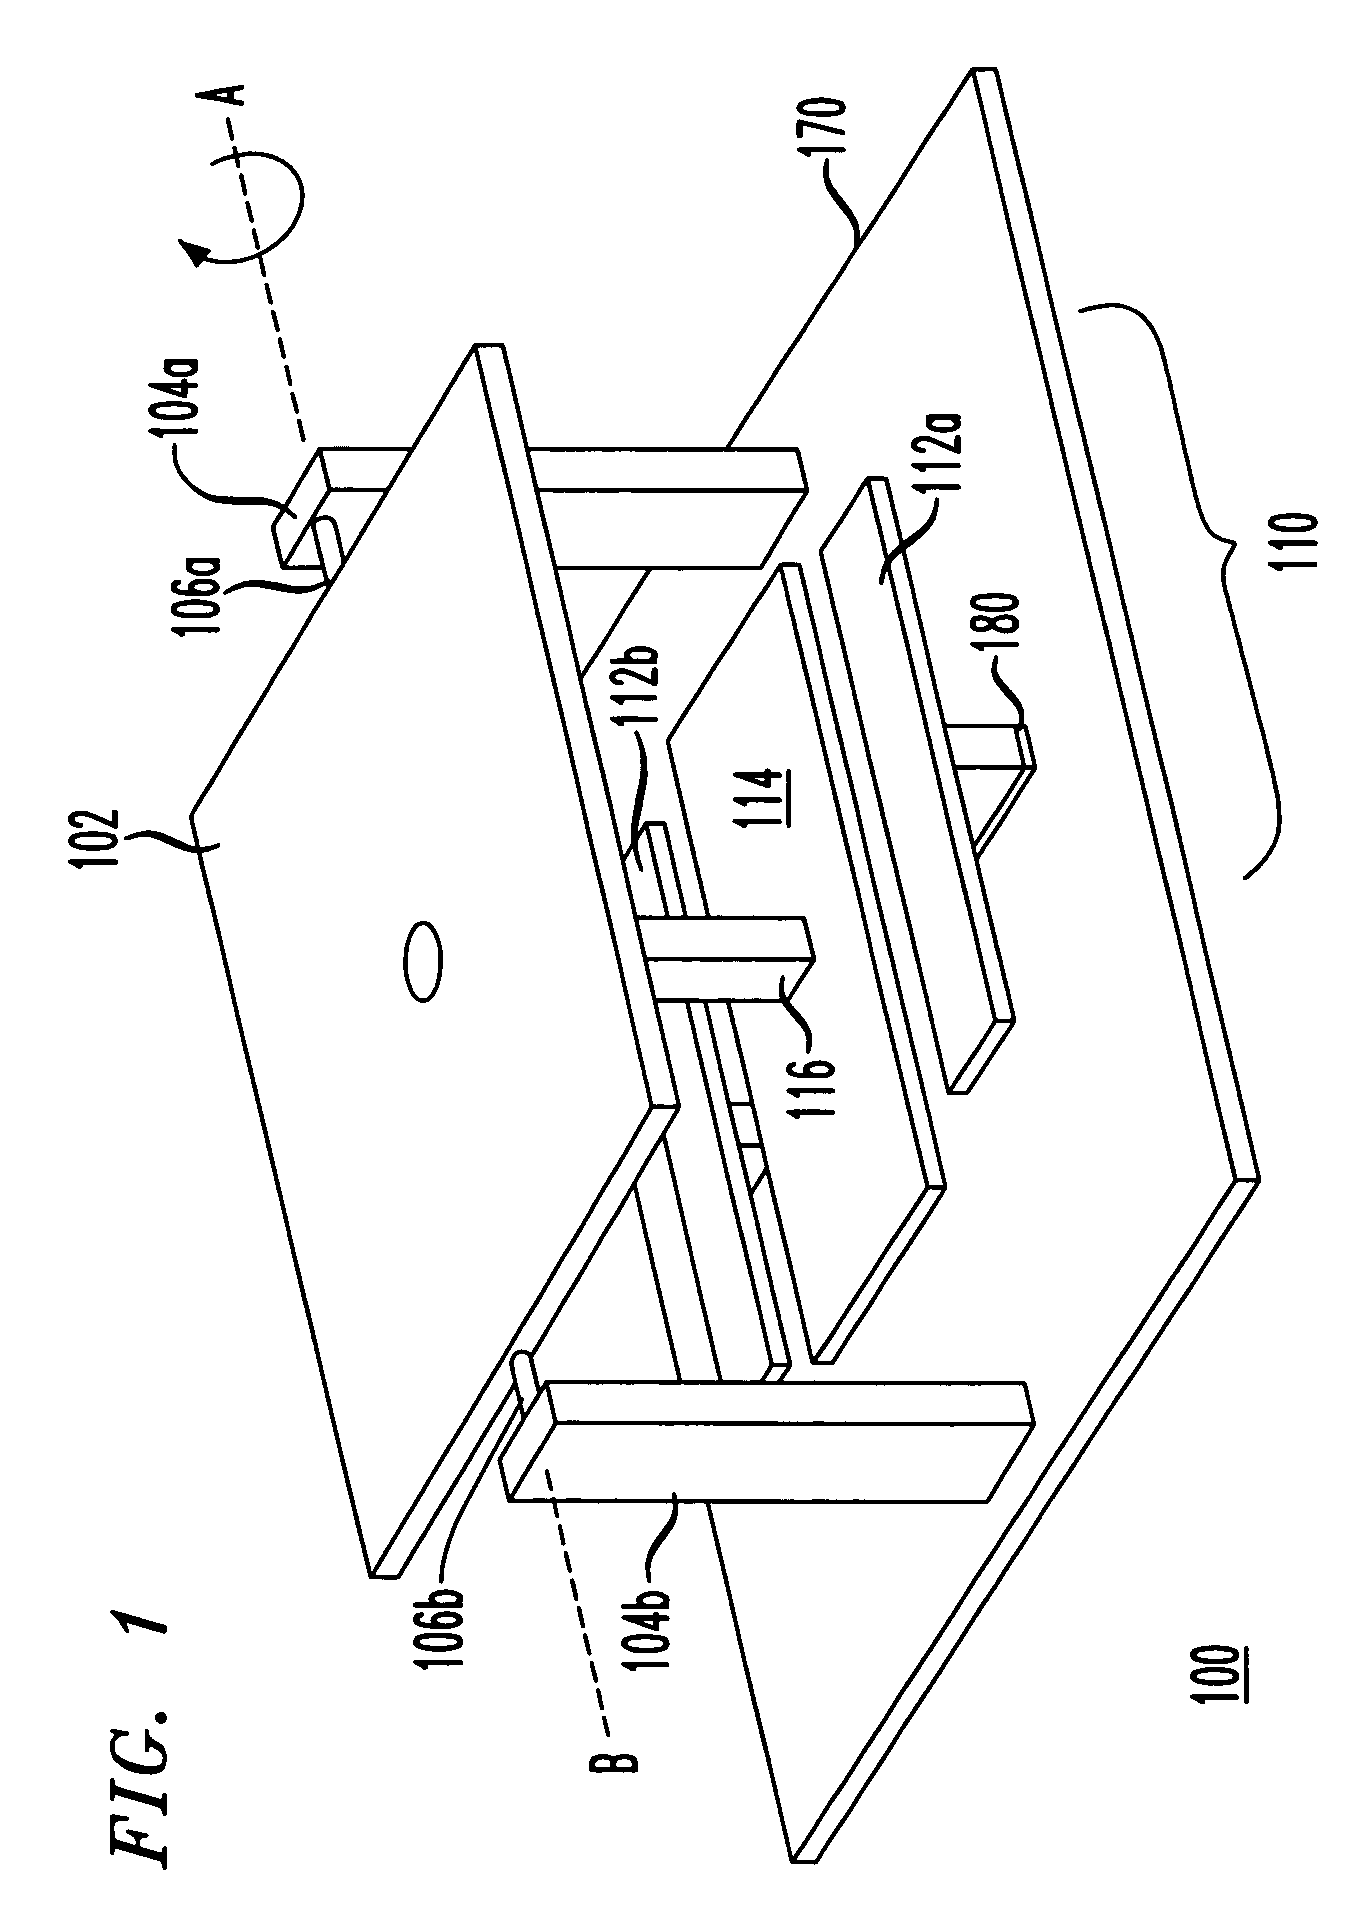 MEMS device for an adaptive optics mirror